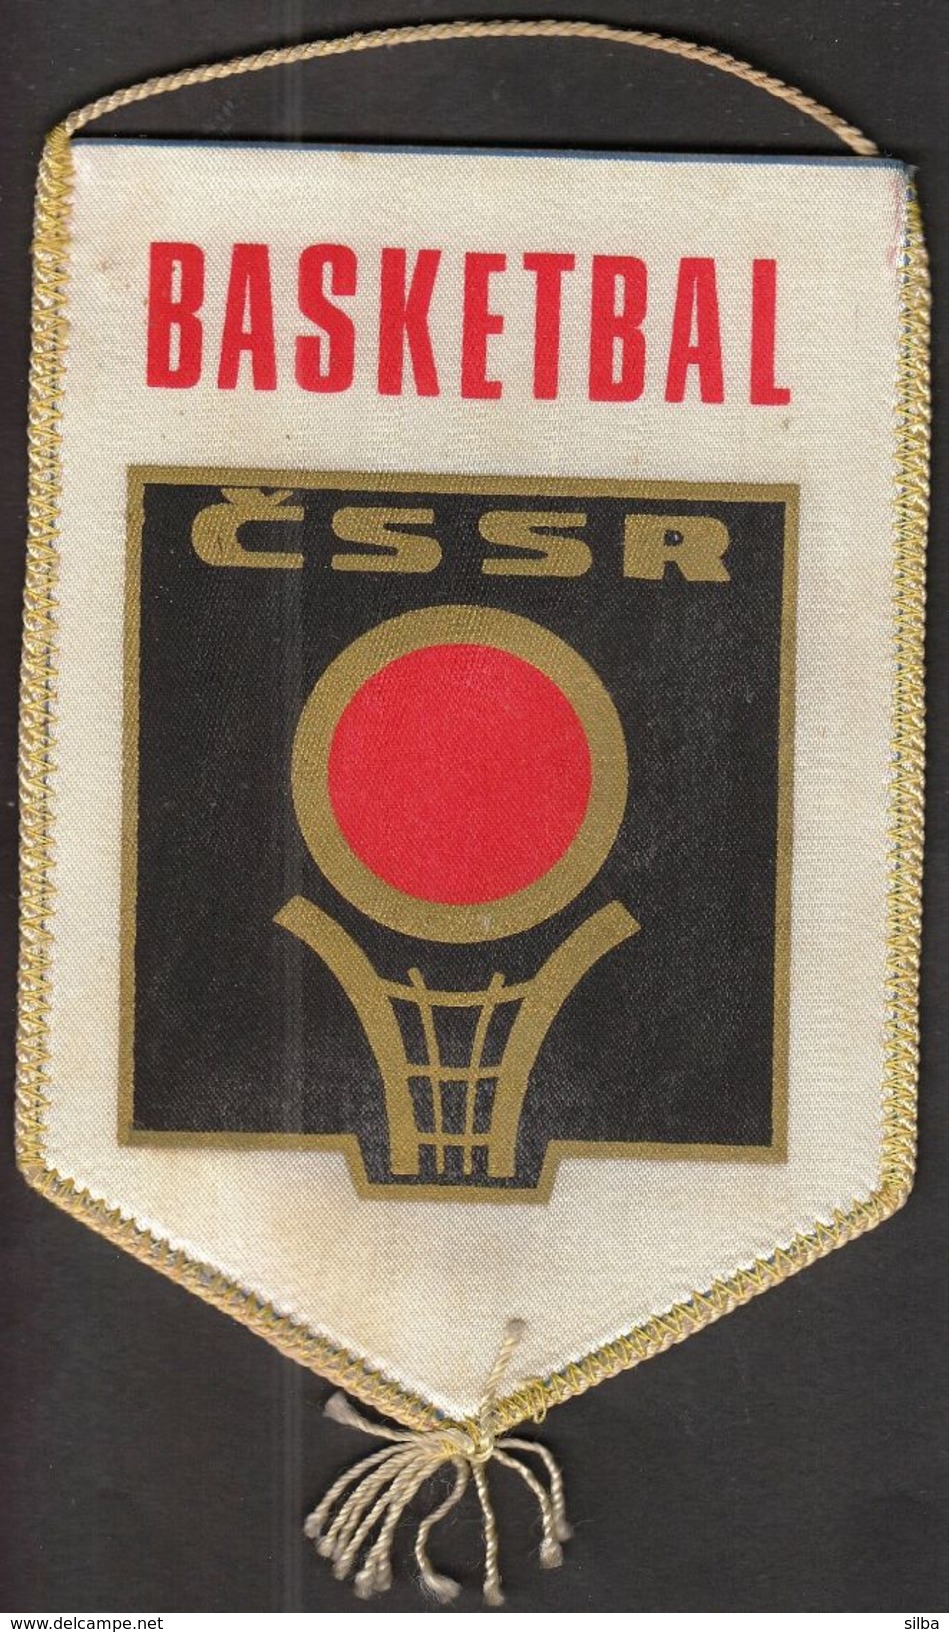 Basketball / Flag, Pennant / Czechoslovakia / Czechoslovak Basketball Federation - Uniformes, Recordatorios & Misc